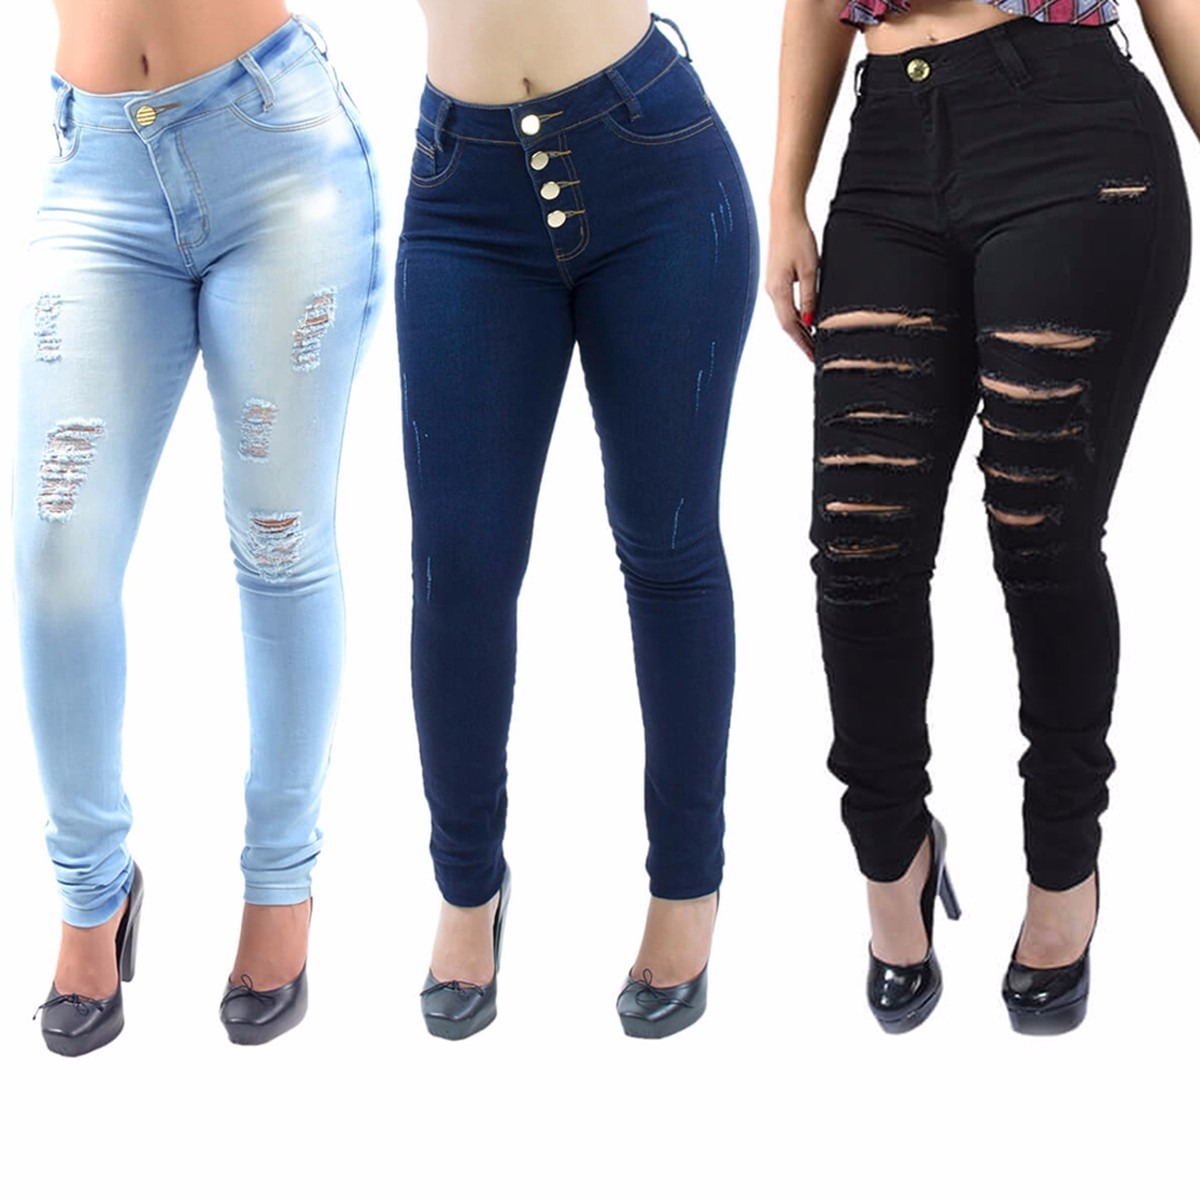 Kit De 3 Calças Jeans Feminina Cintura Alta Levanta Bumbum R 187 90 Em Mercado Livre